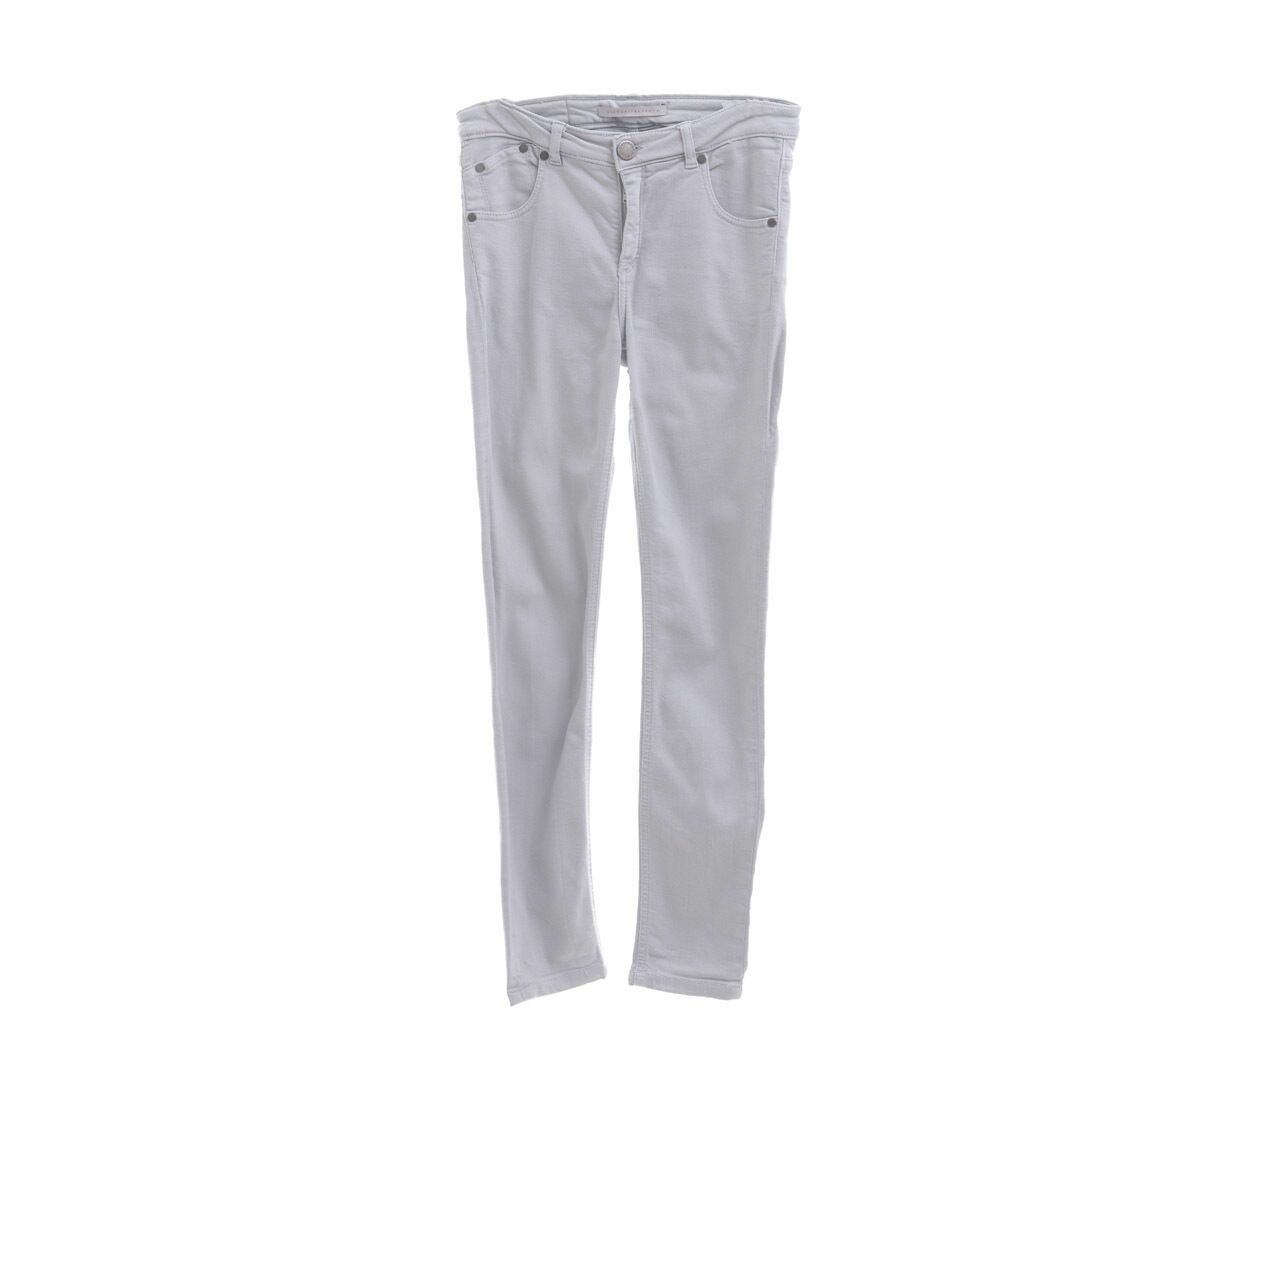 Victoria Beckham Light Grey Long Pants